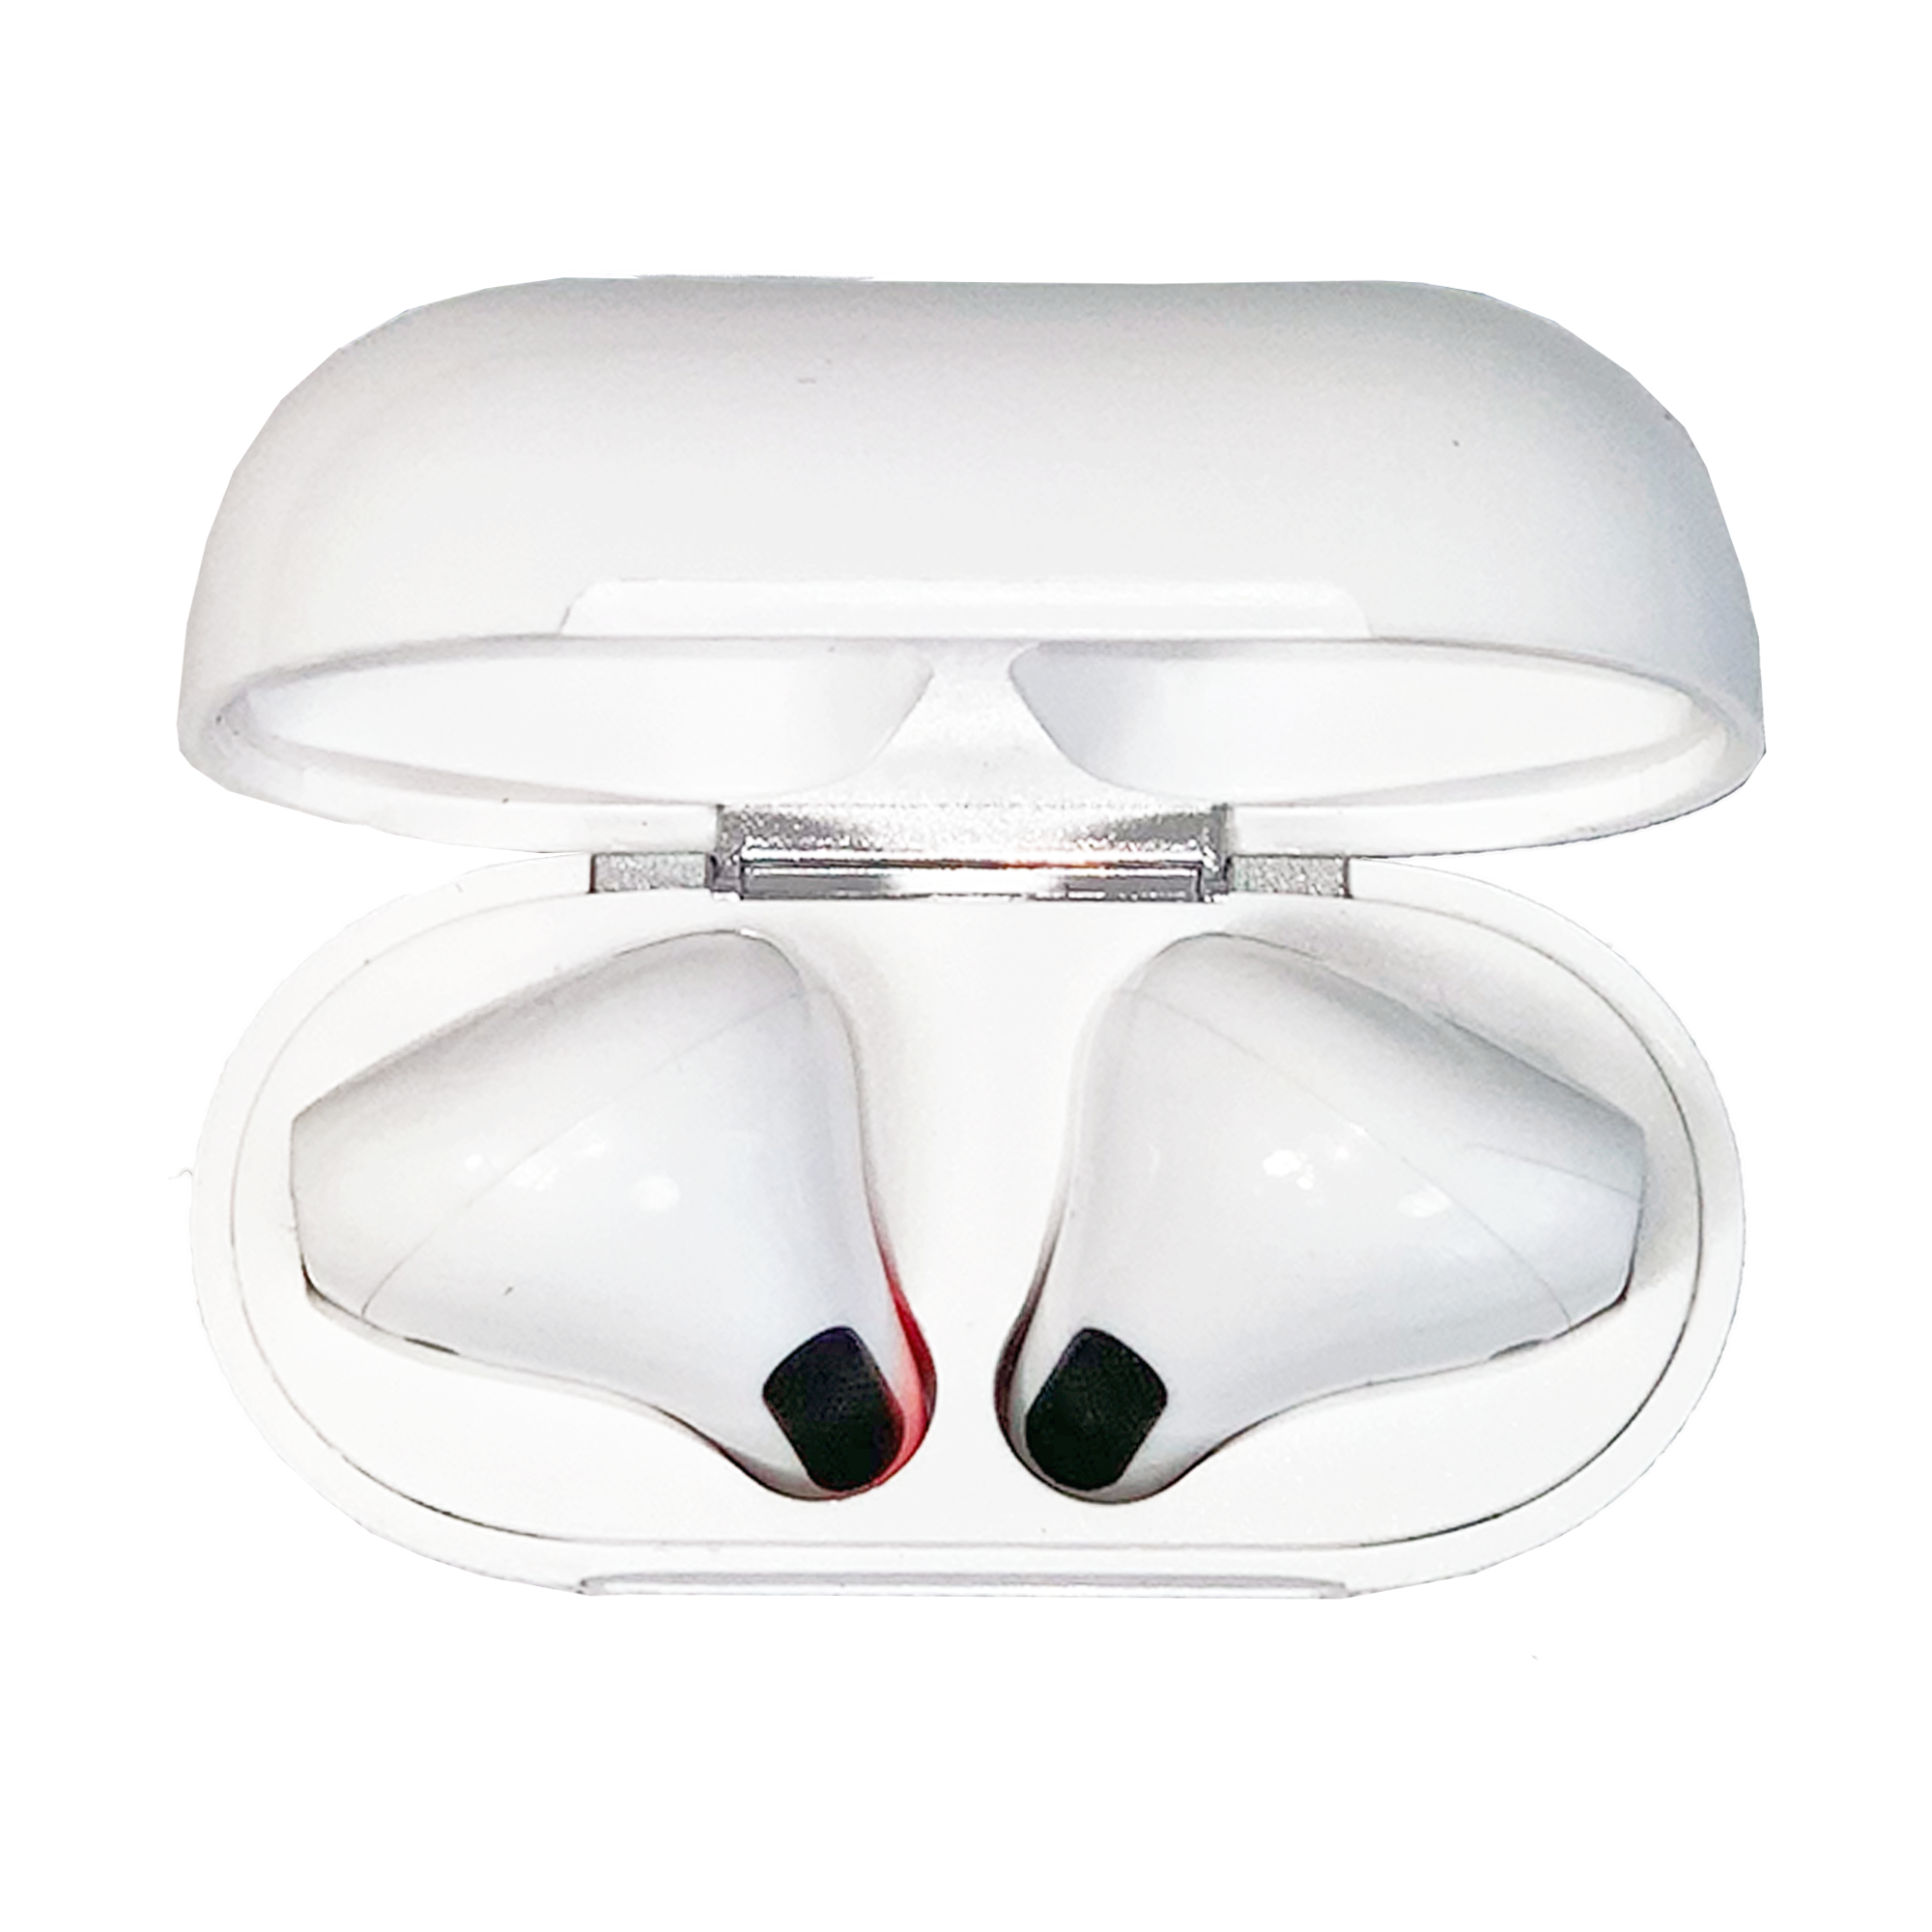 Bluetooth Kopfhörer Twin Bluetooth Pro LEICKE Mini In-ear 3, Weiß